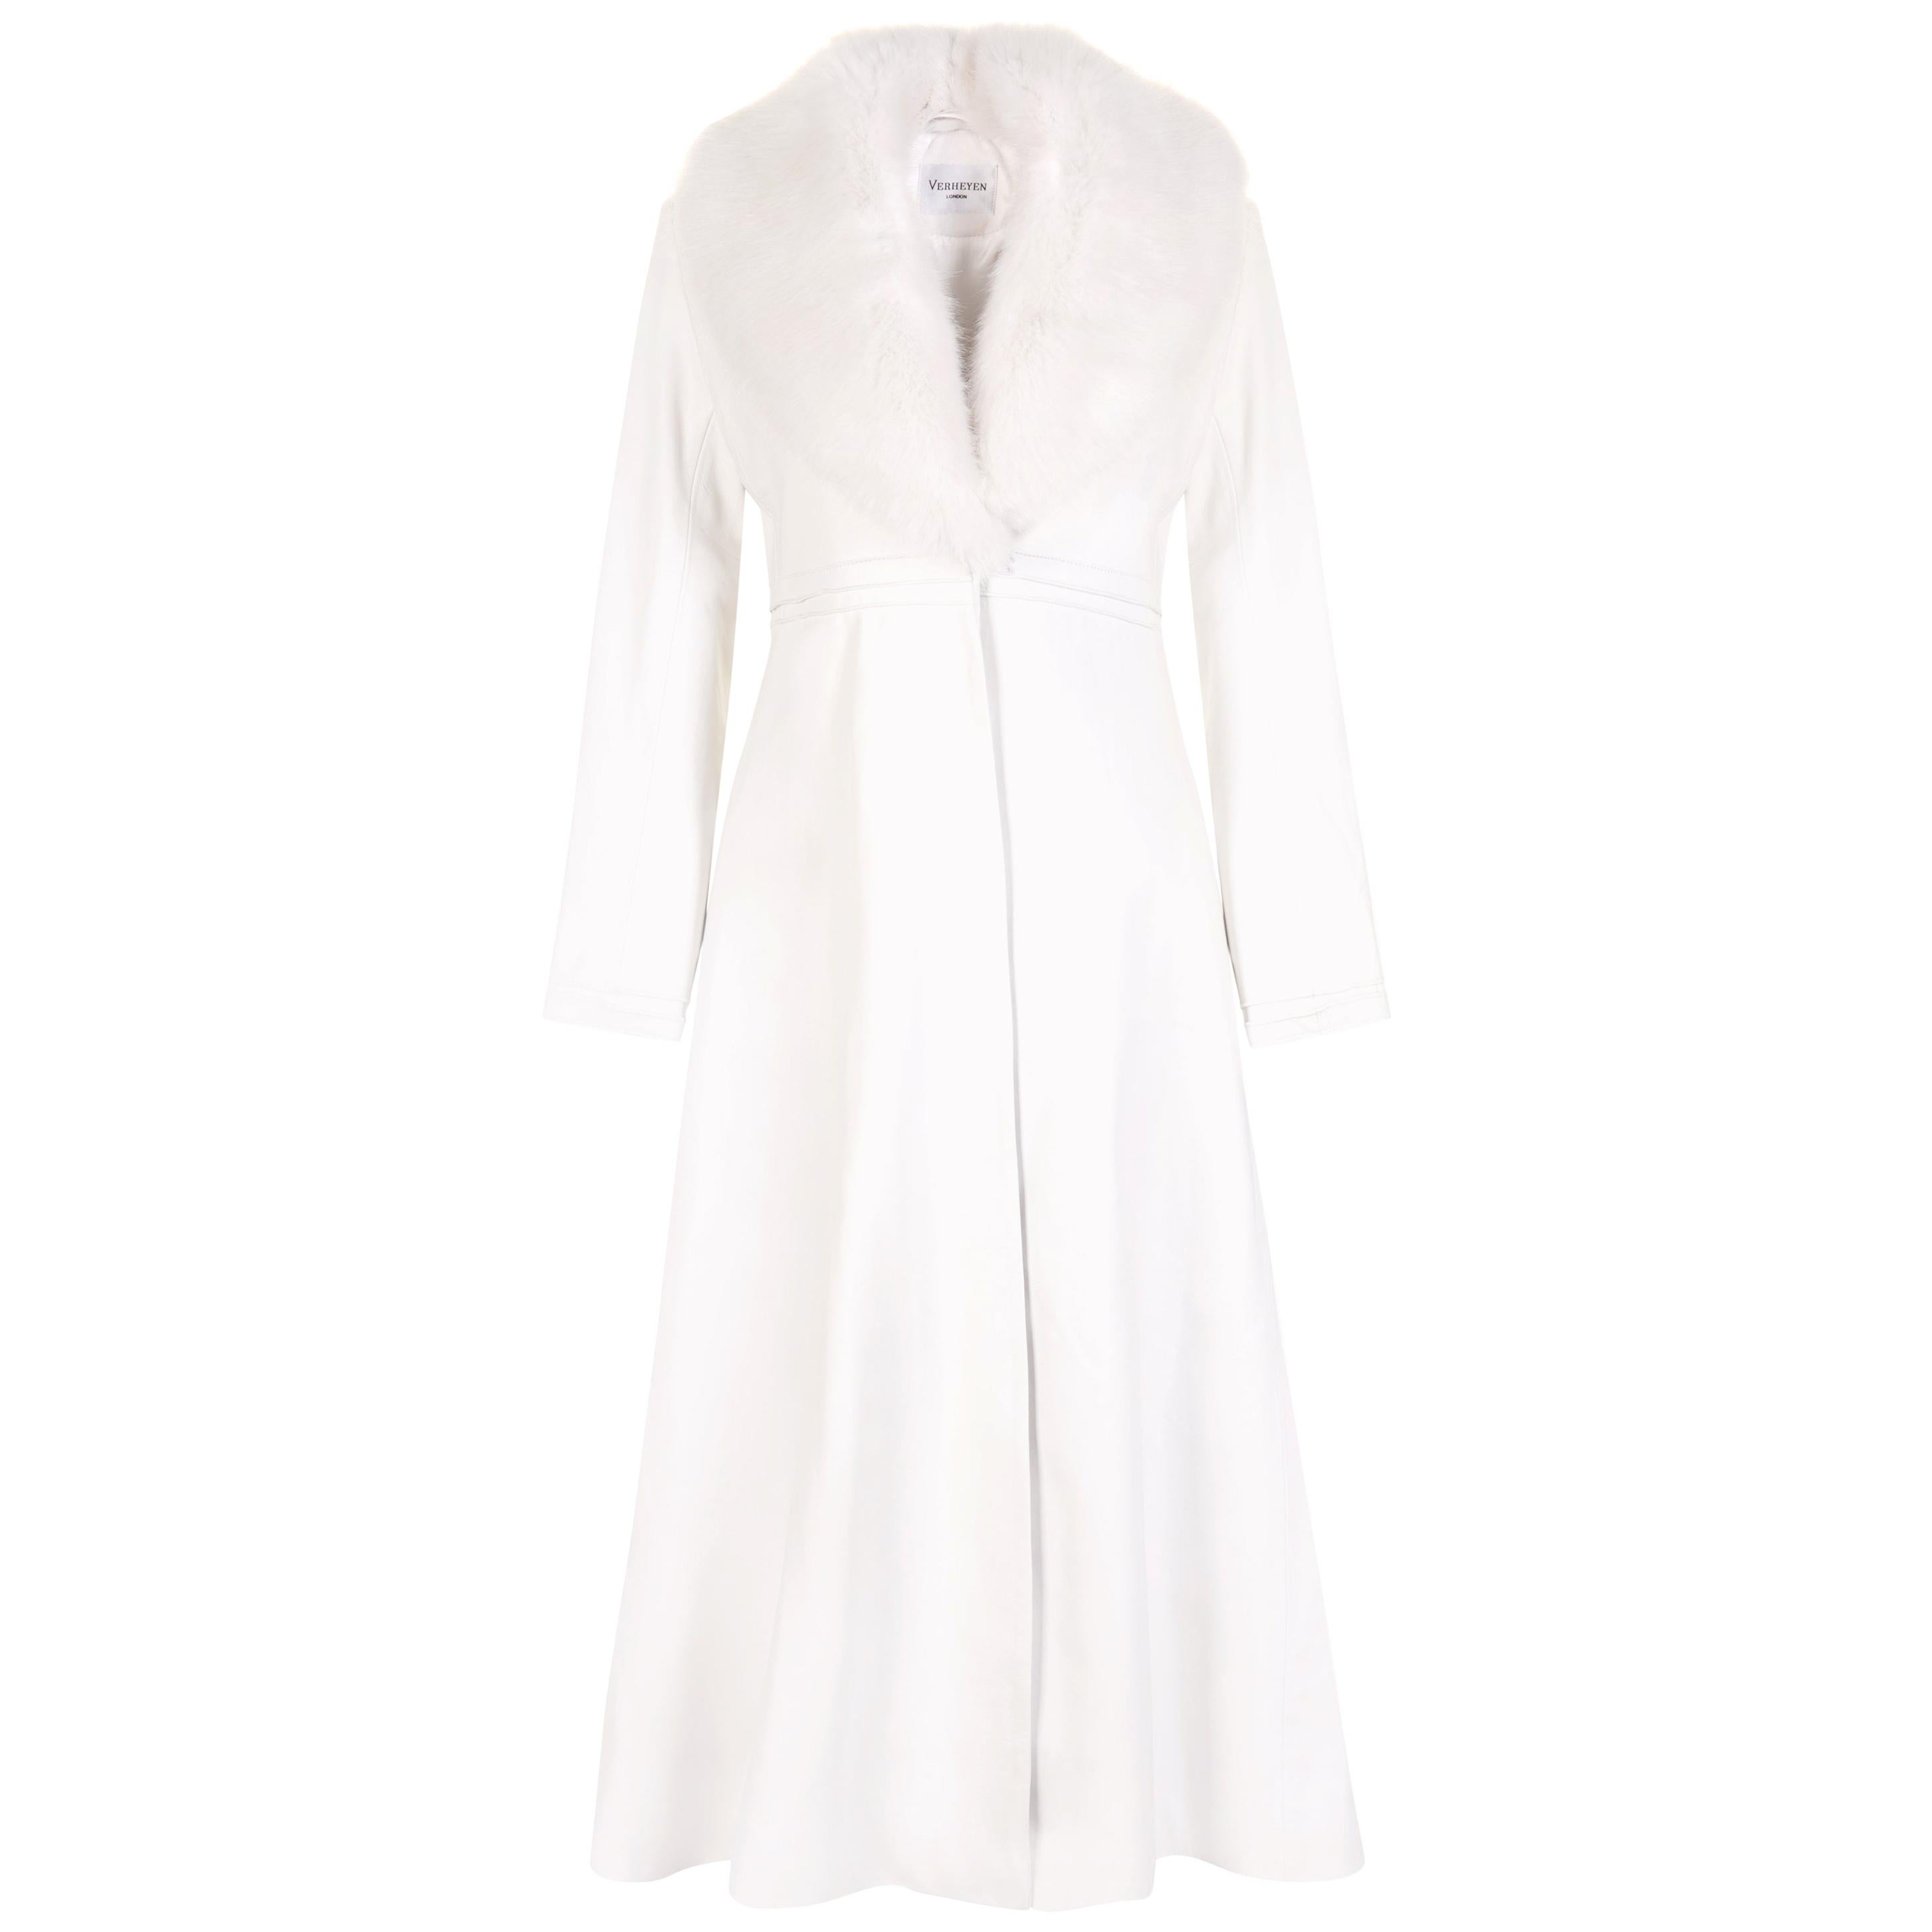 Verheyen London Edward Leather Coat in White with Faux Fur - Size uk 8 (Manteau en cuir blanc avec fausse fourrure) 